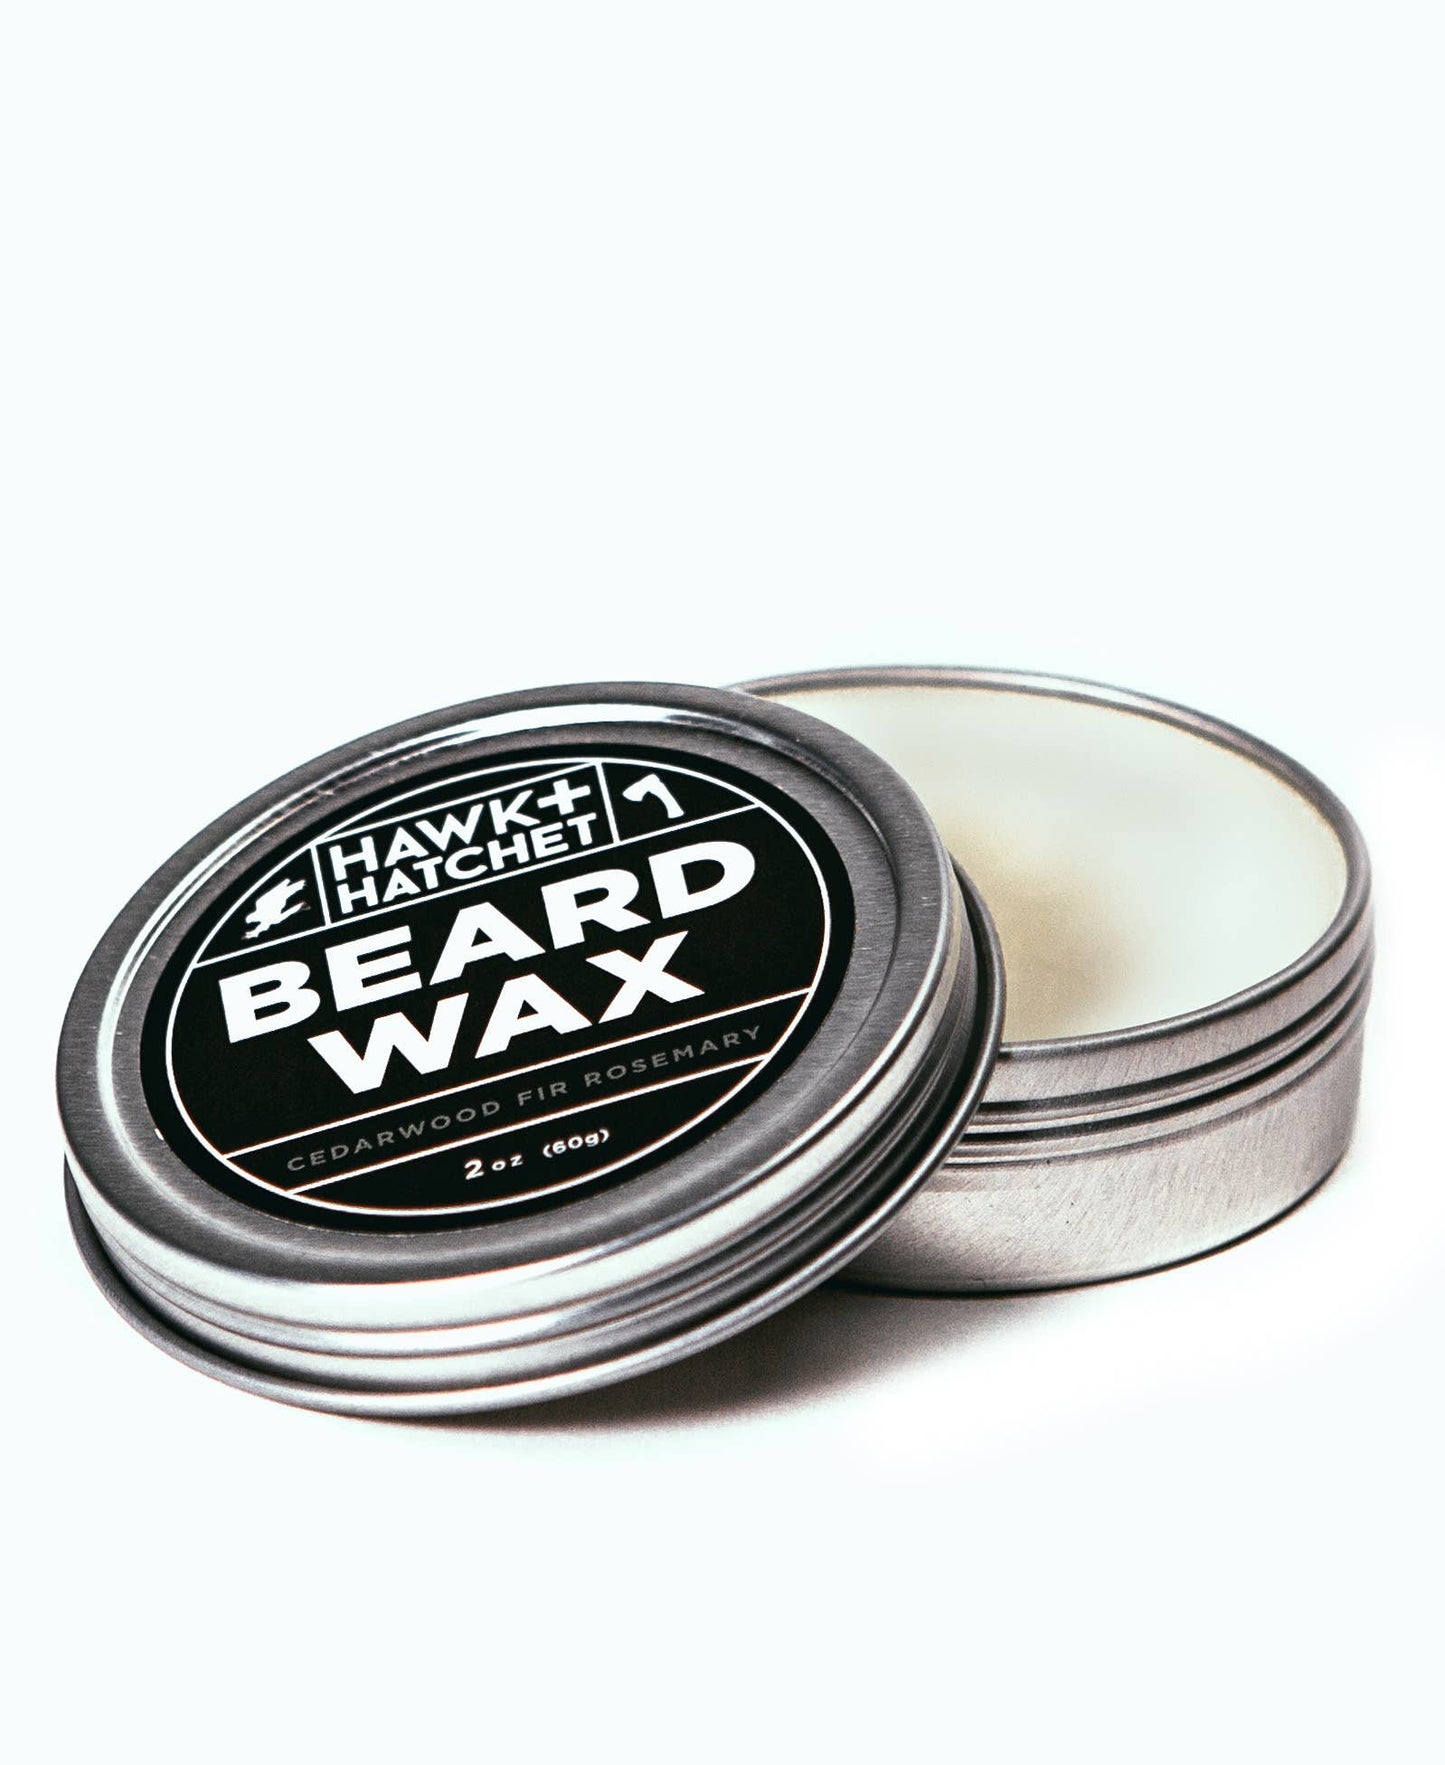 "Hawk & Hatchet" Beard Wax - Cedarwood, Fir and Rosemary